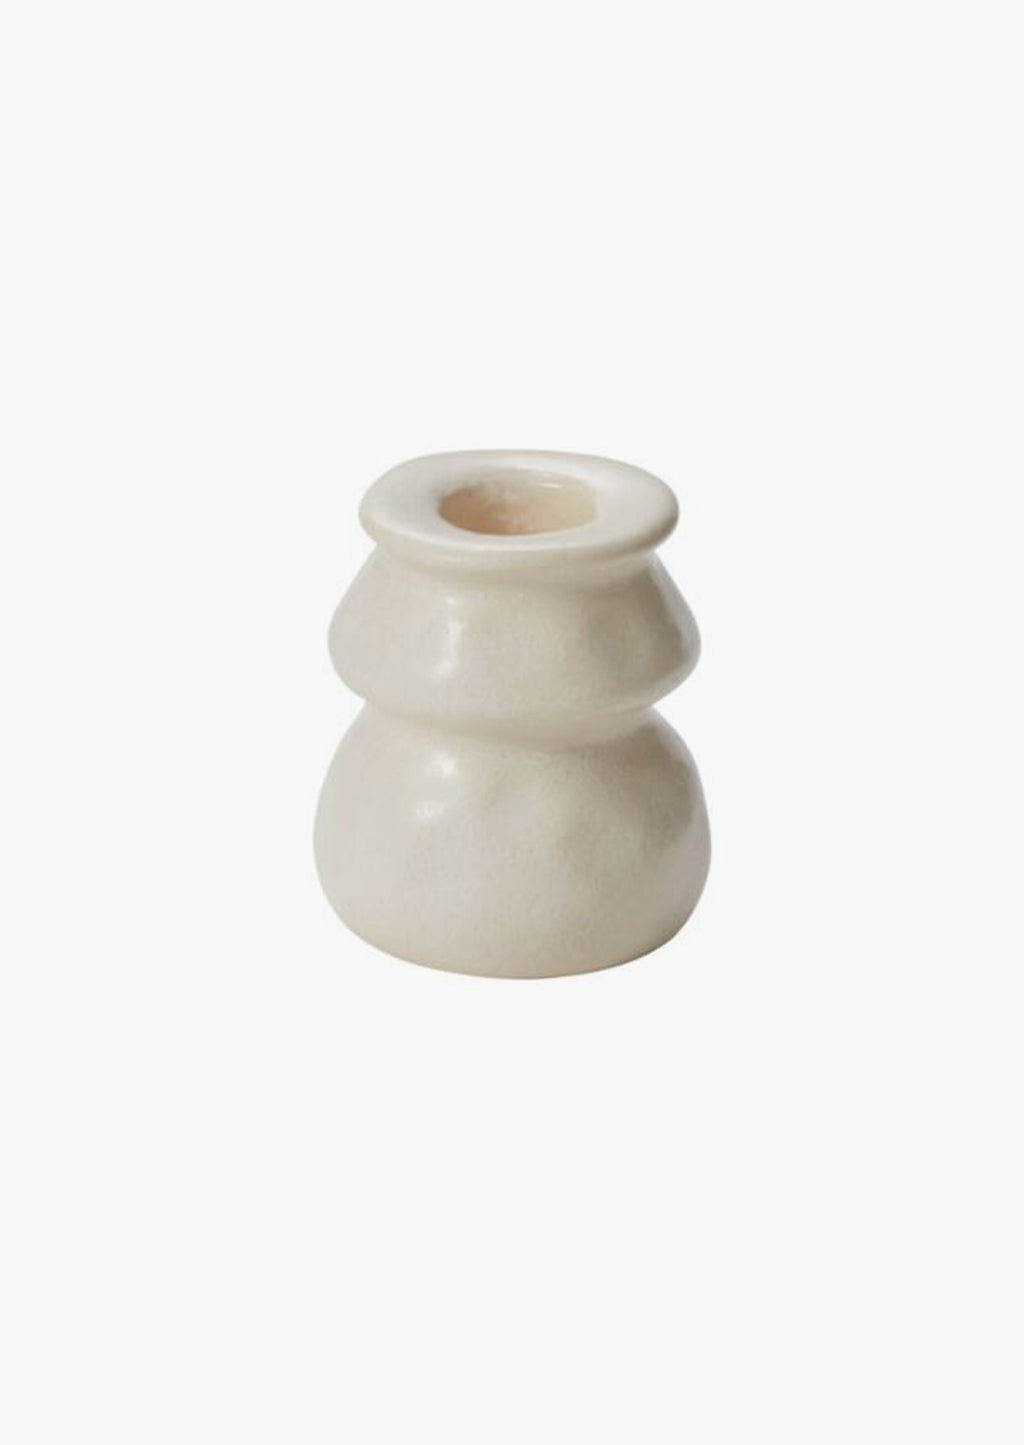 Short: Satin finish ceramic candleholders in white.